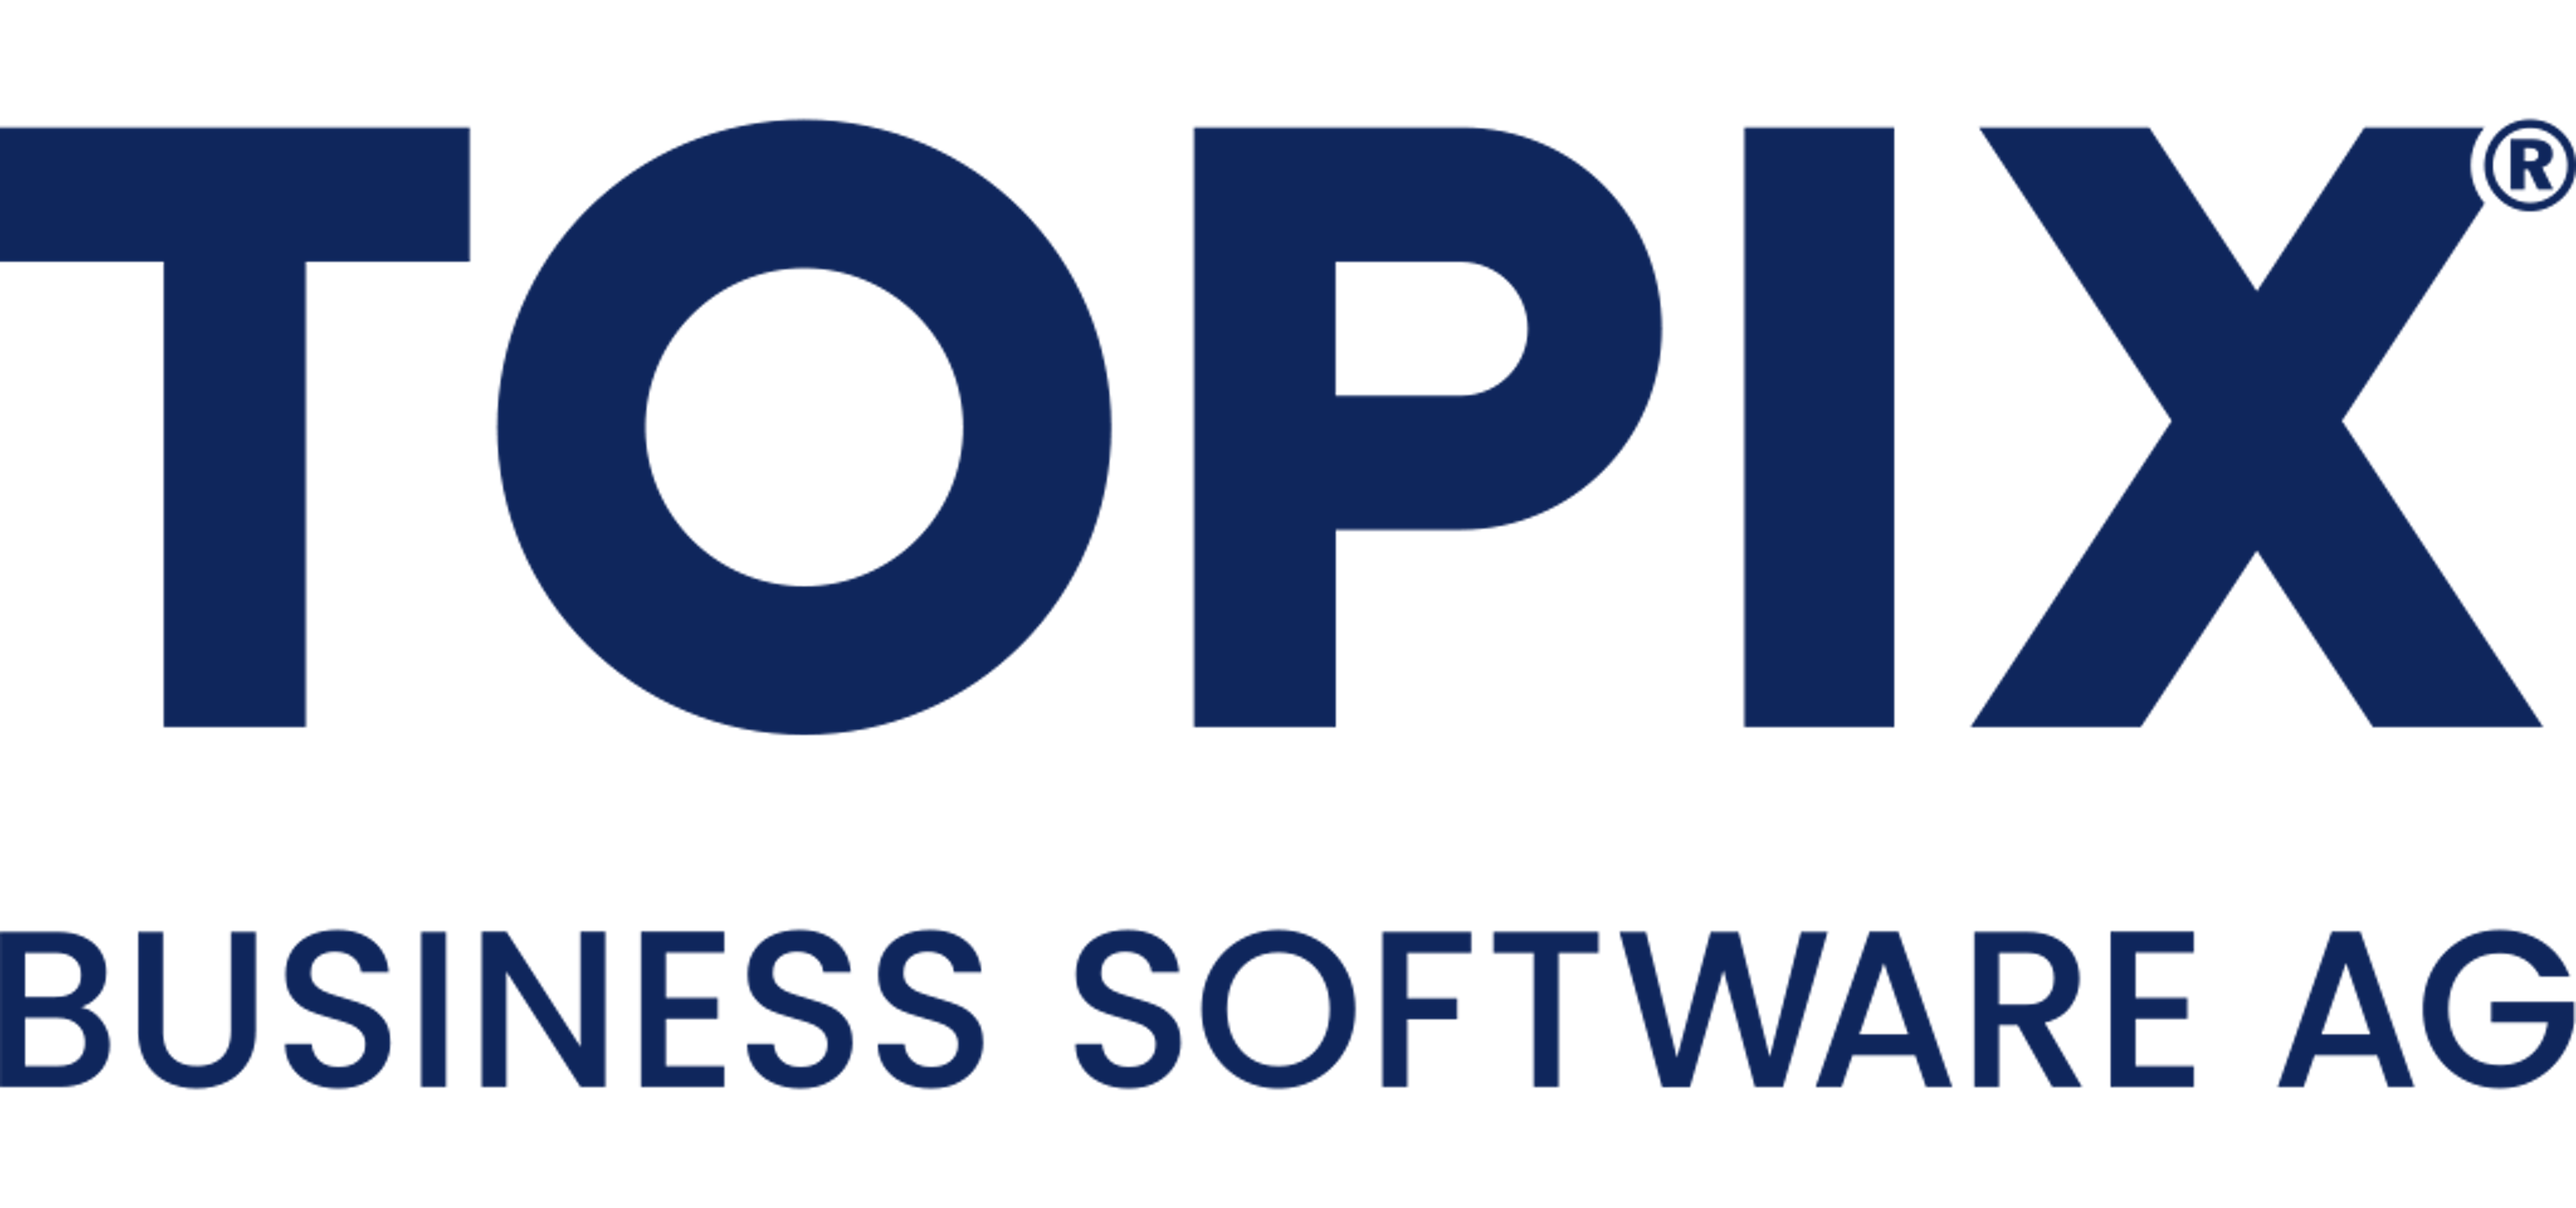 TOPIX Logo